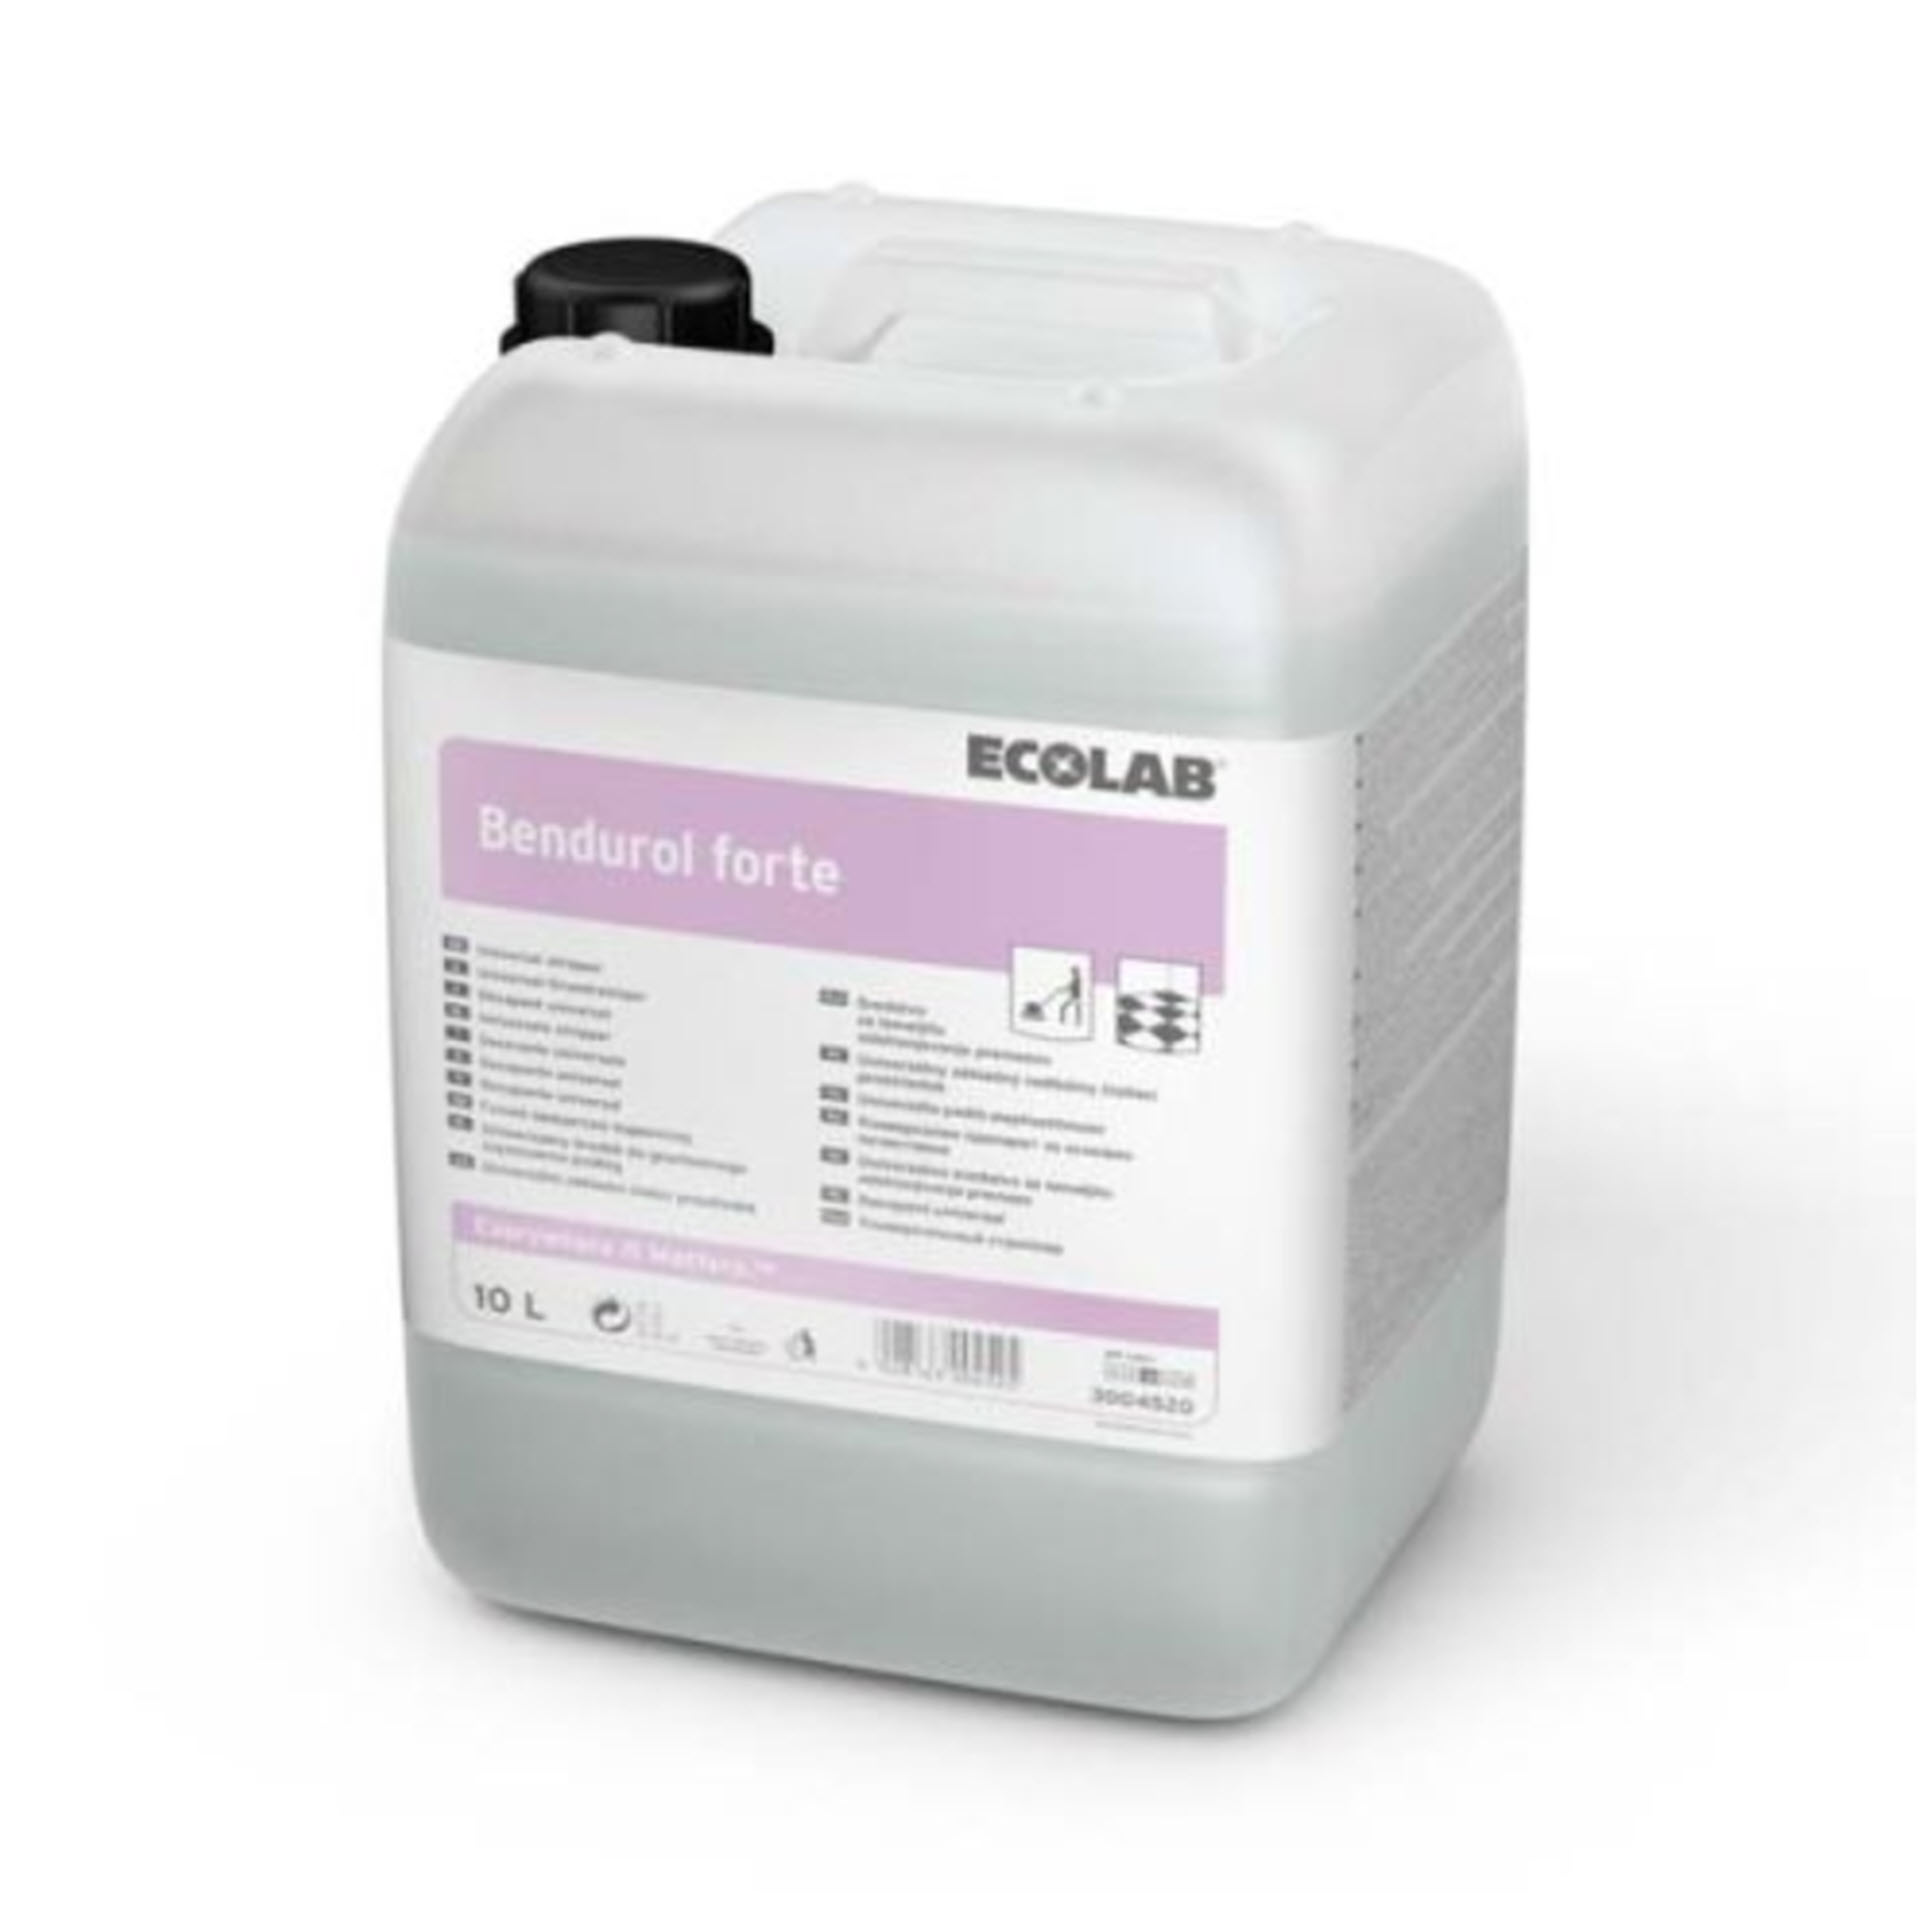 Ecolab Bendurol forte Grundreiniger (BFR1N) - 10 Liter Kanister